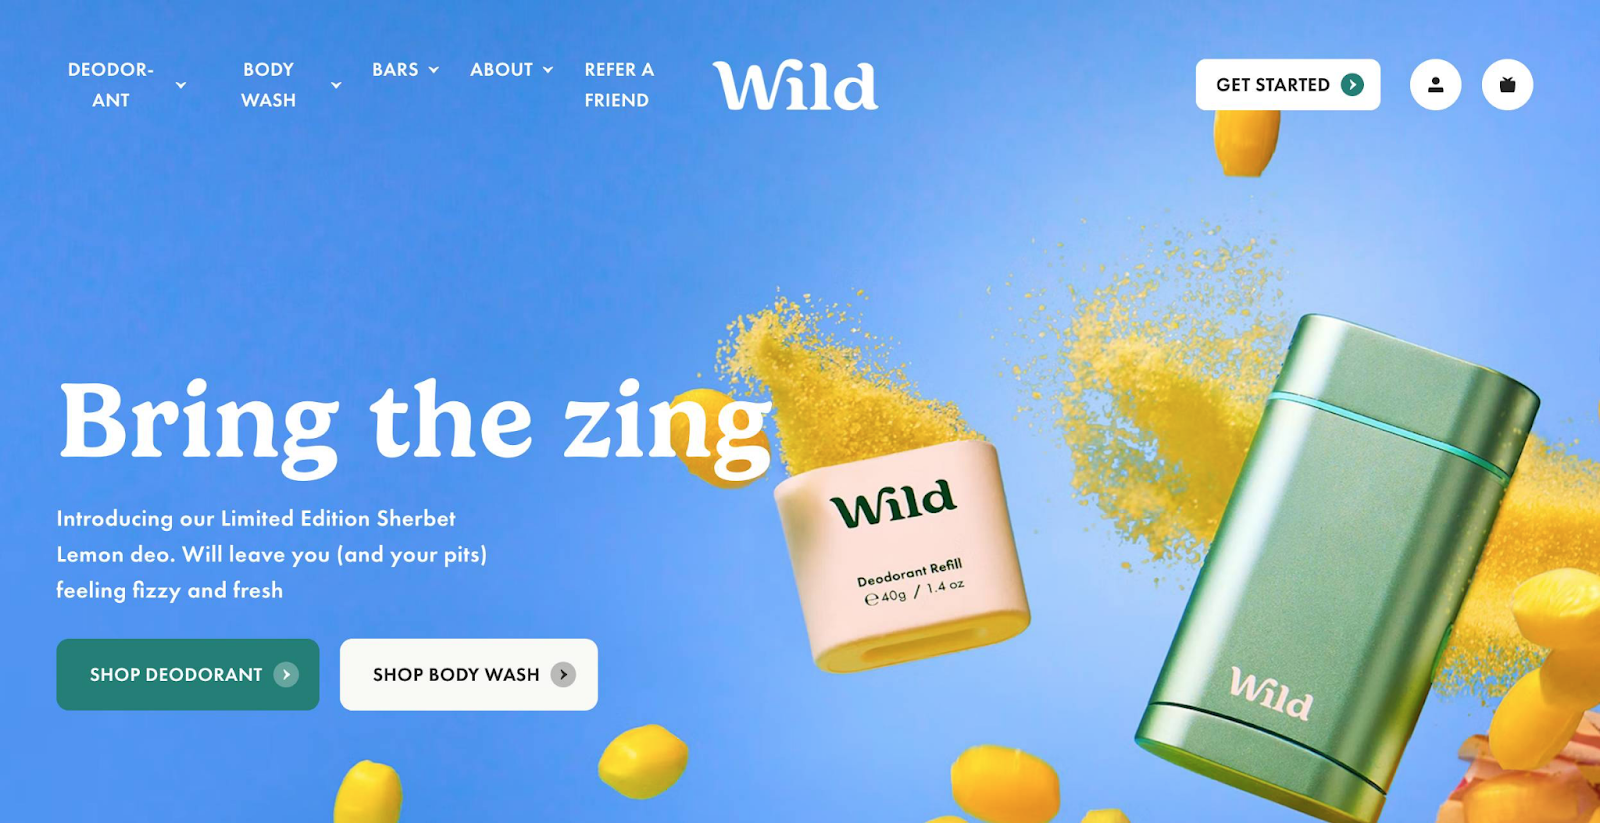 Wild's homepage